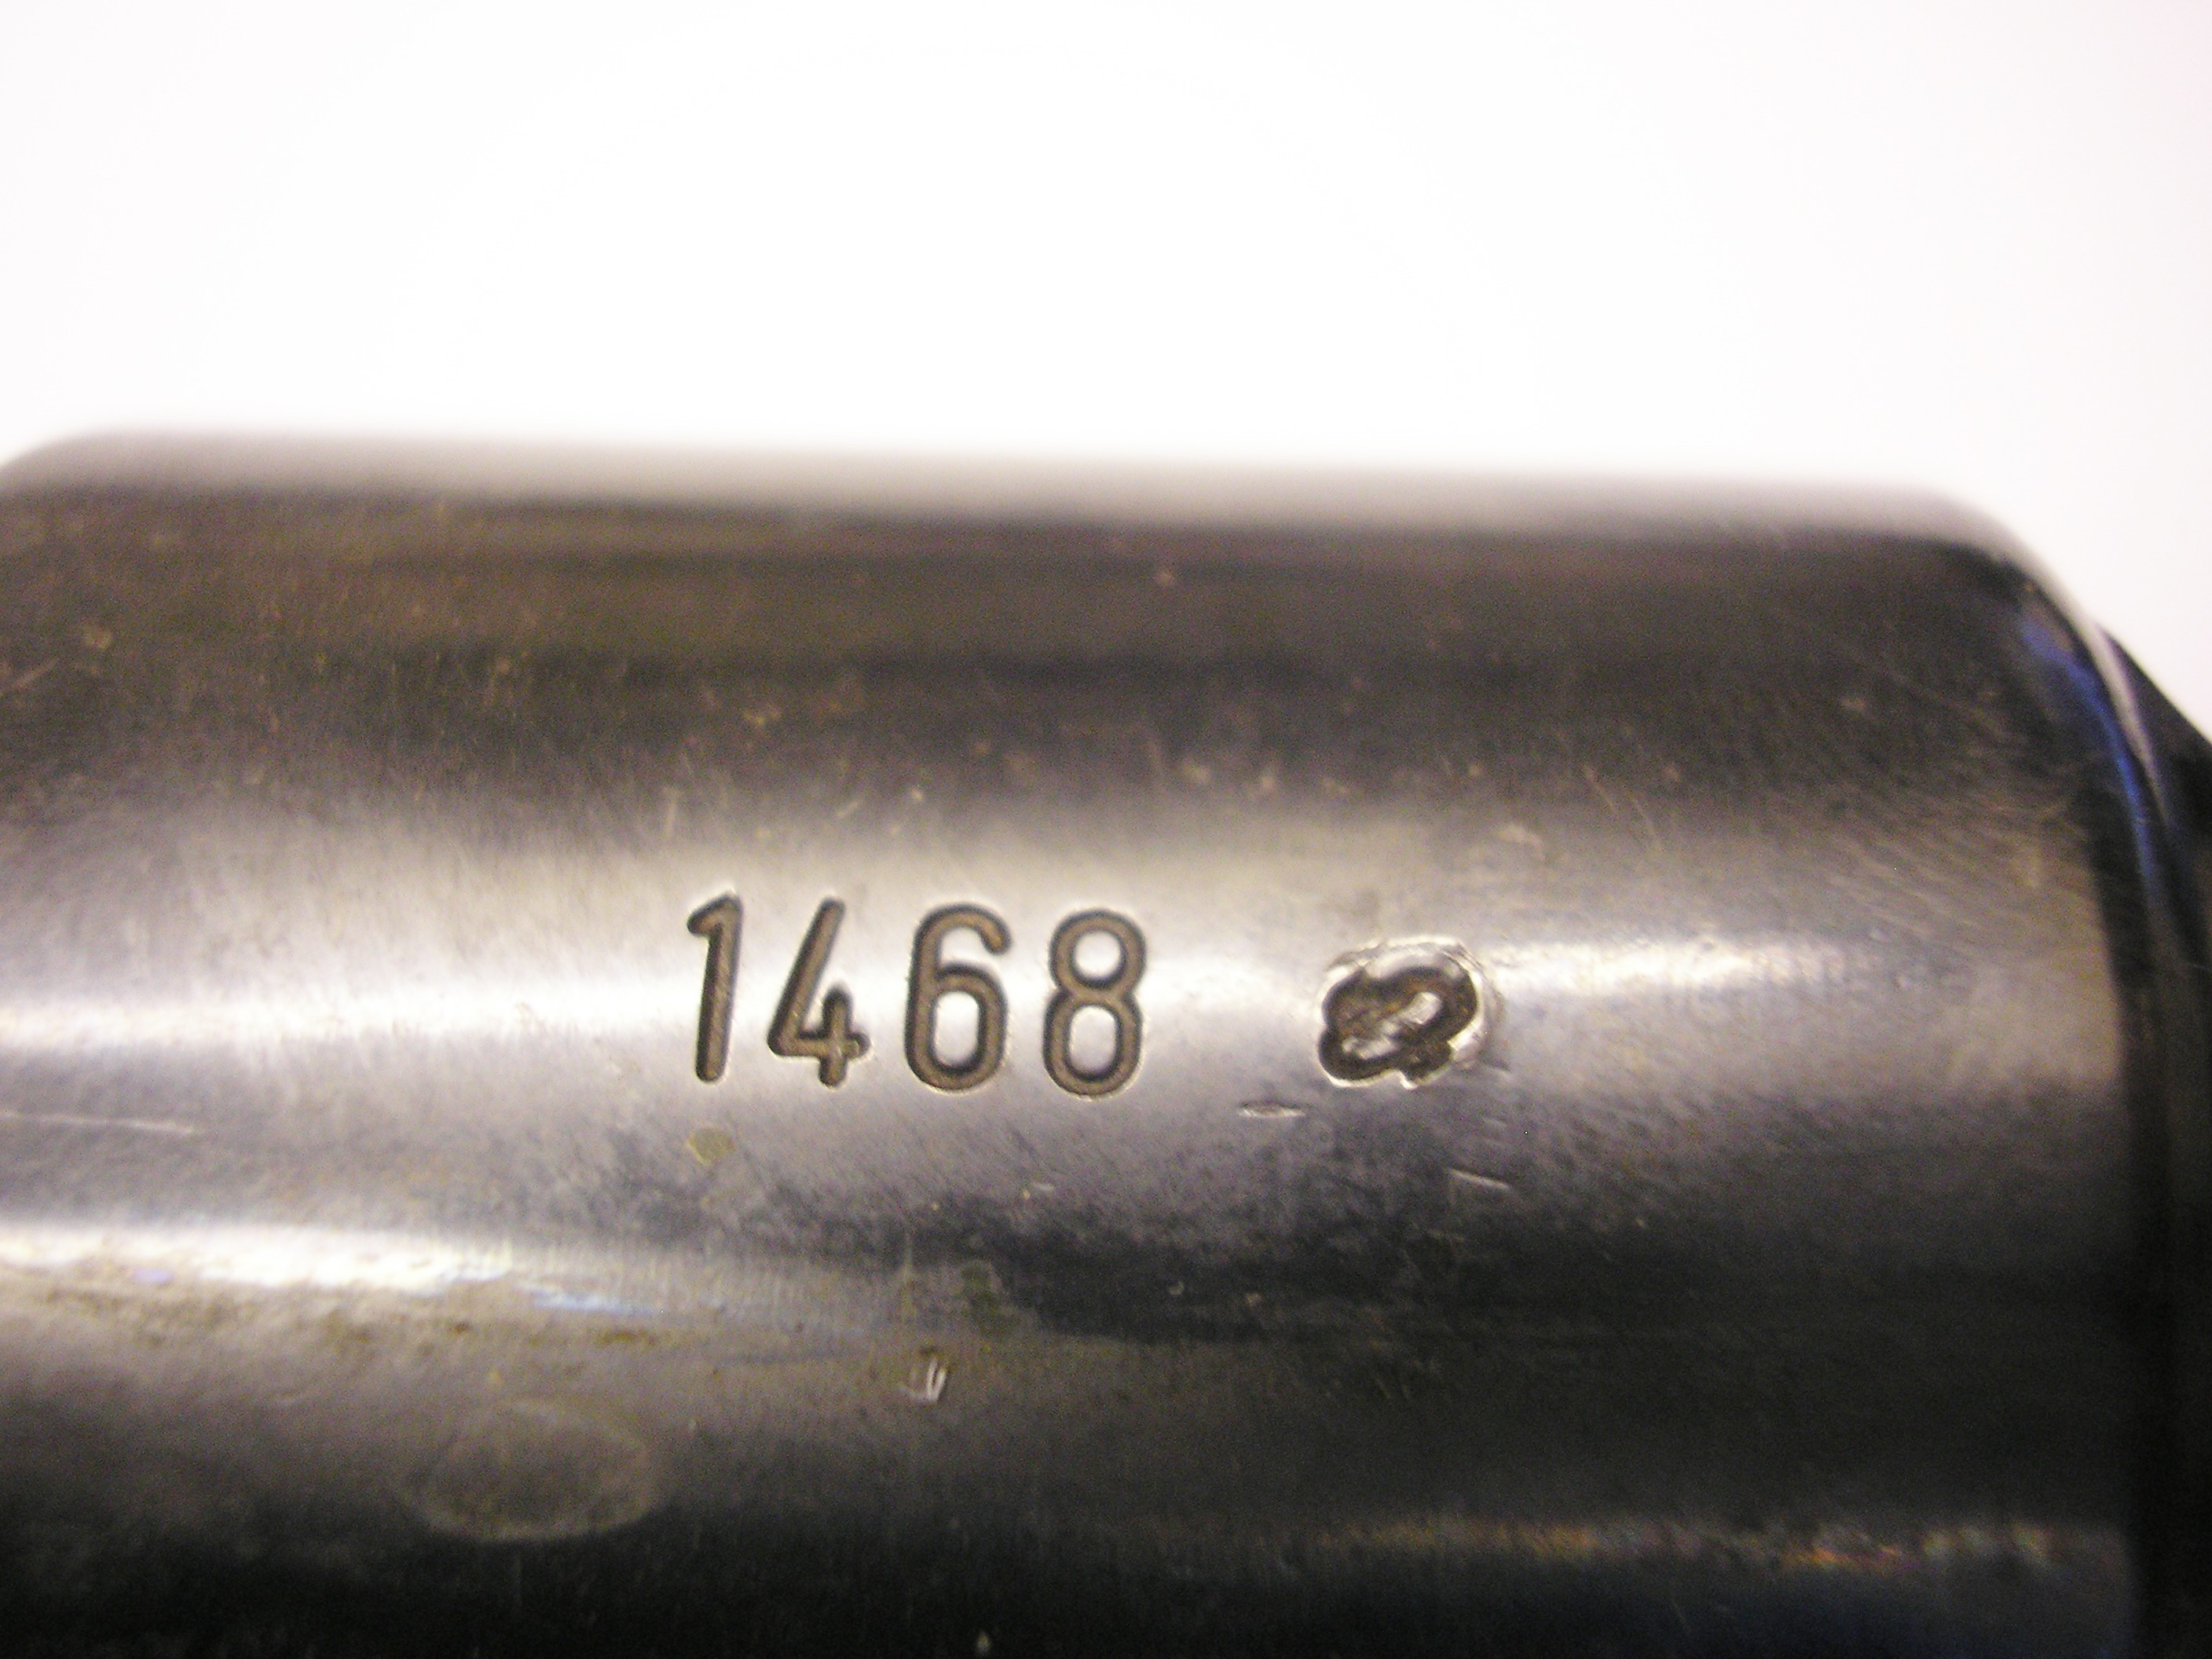 ./guns/rifle/bilder/Rifle-Kongsberg-Mauser-M62-1468-7.JPG